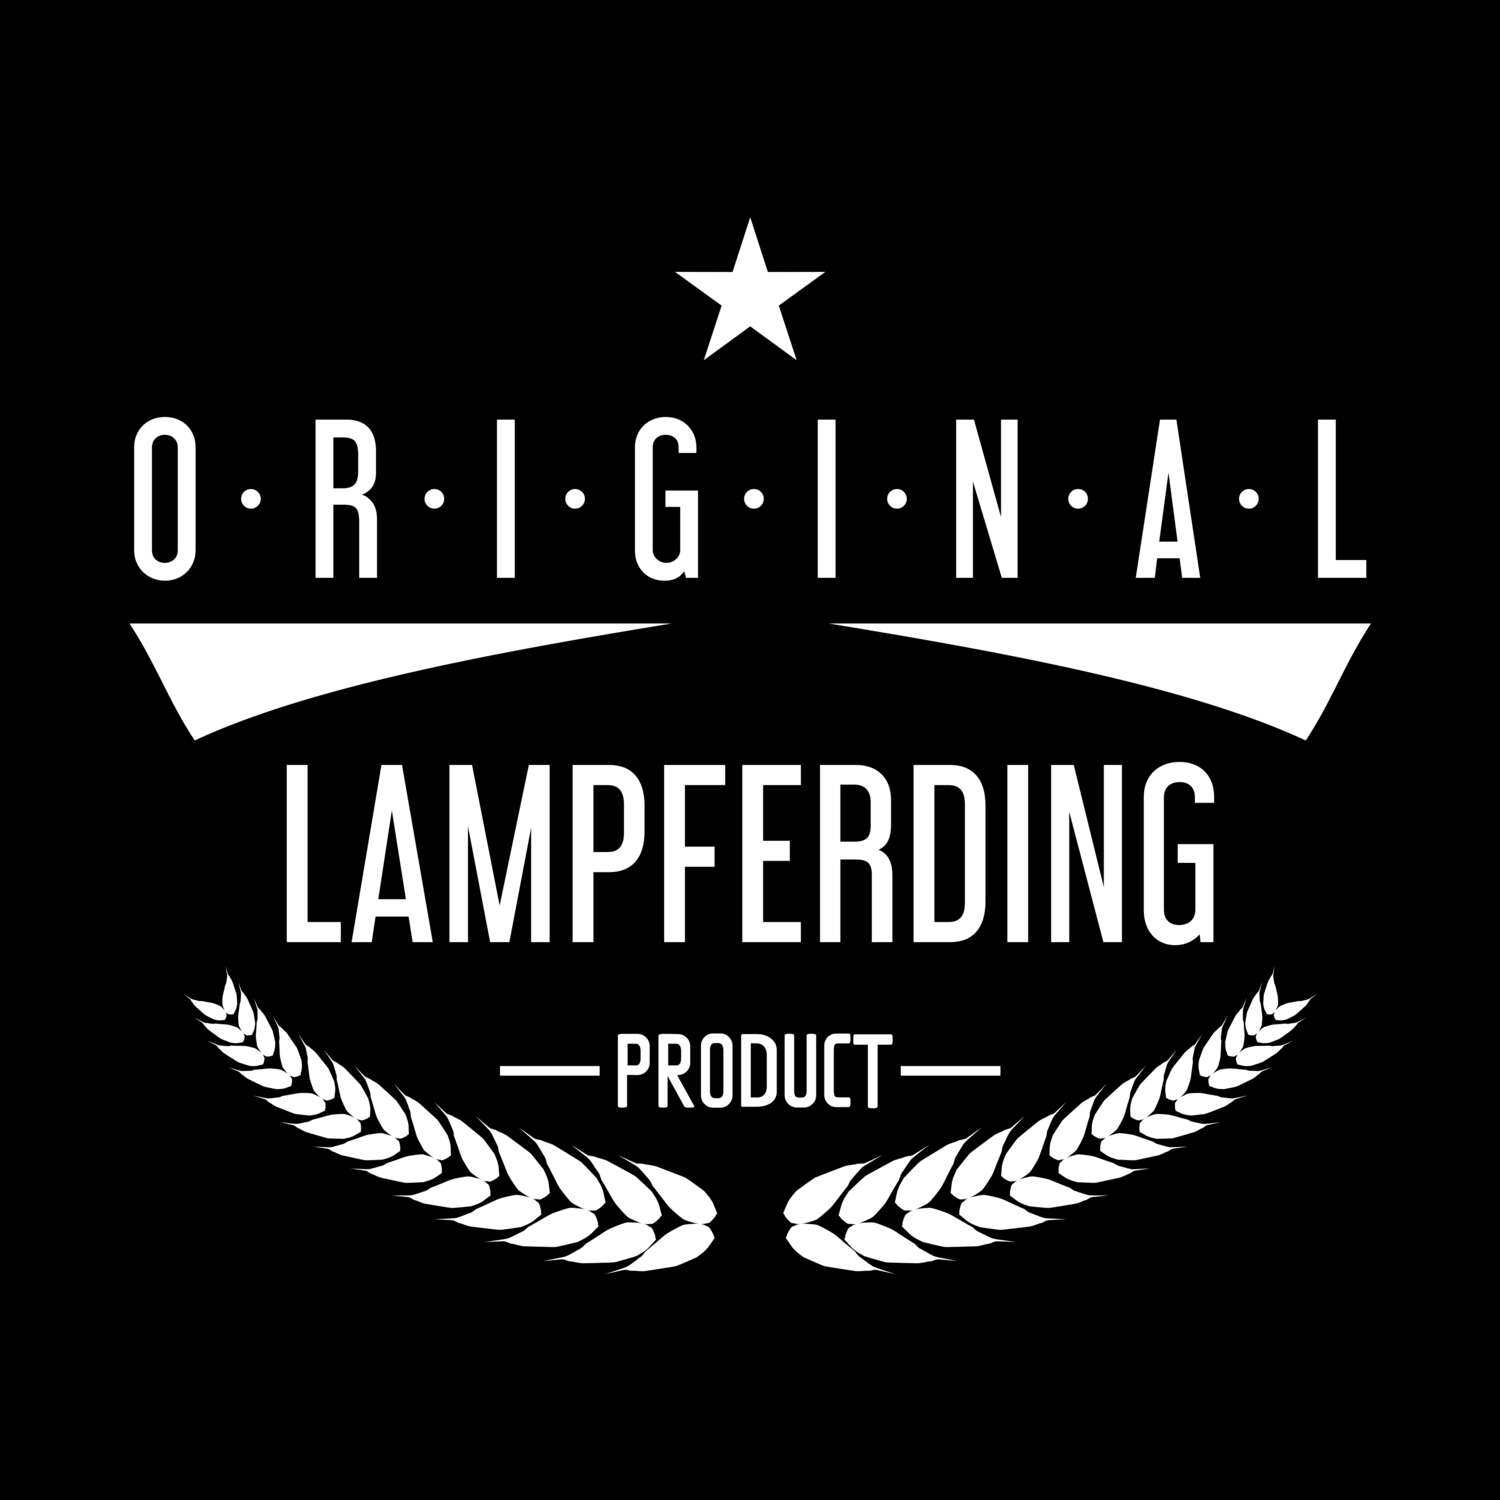 Lampferding T-Shirt »Original Product«